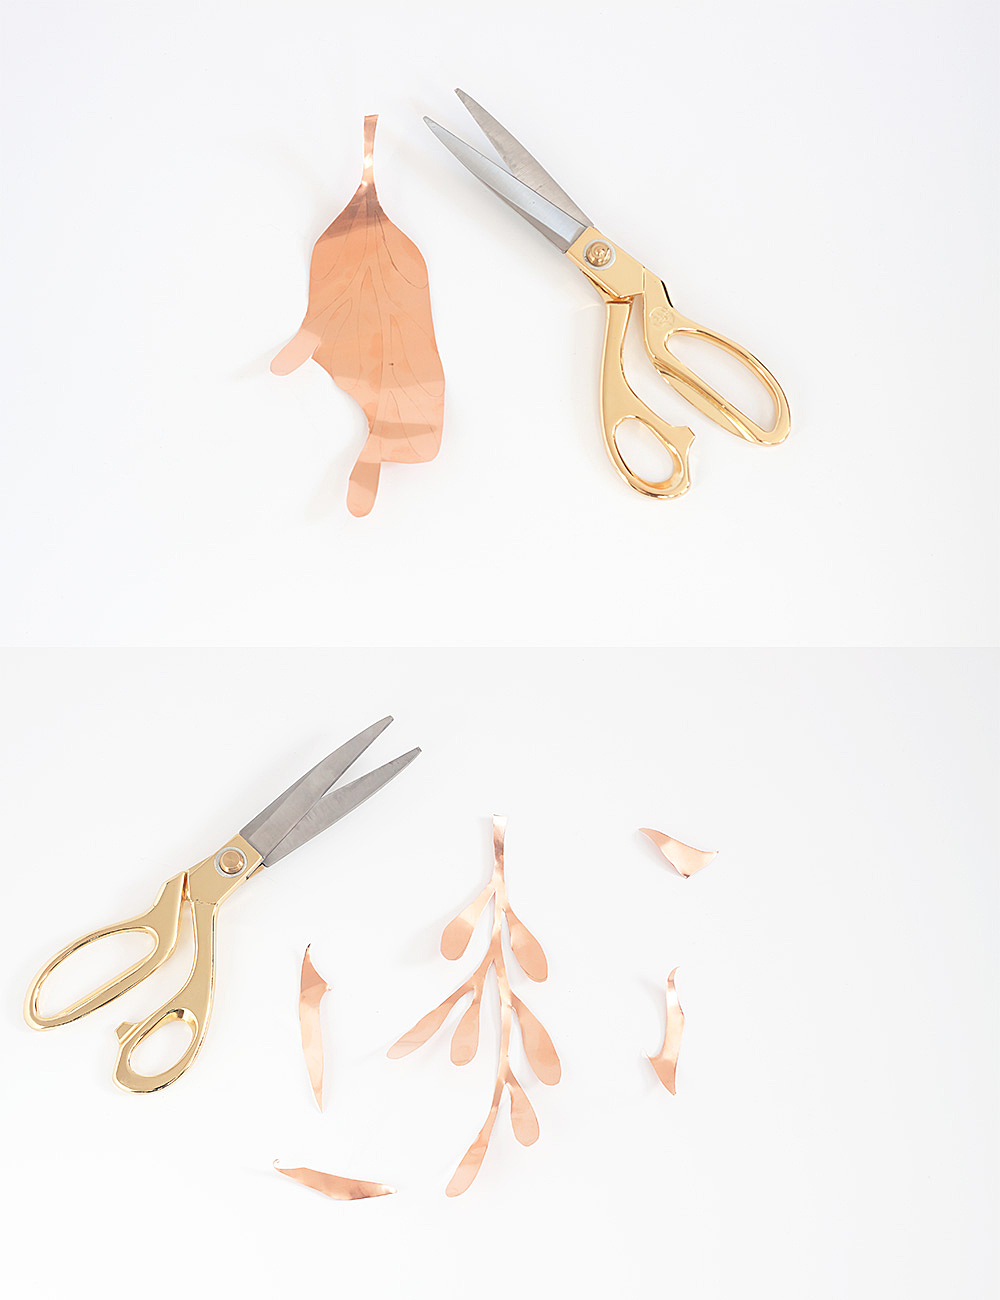 DIY Copper Mistletoe @idlehandsawake